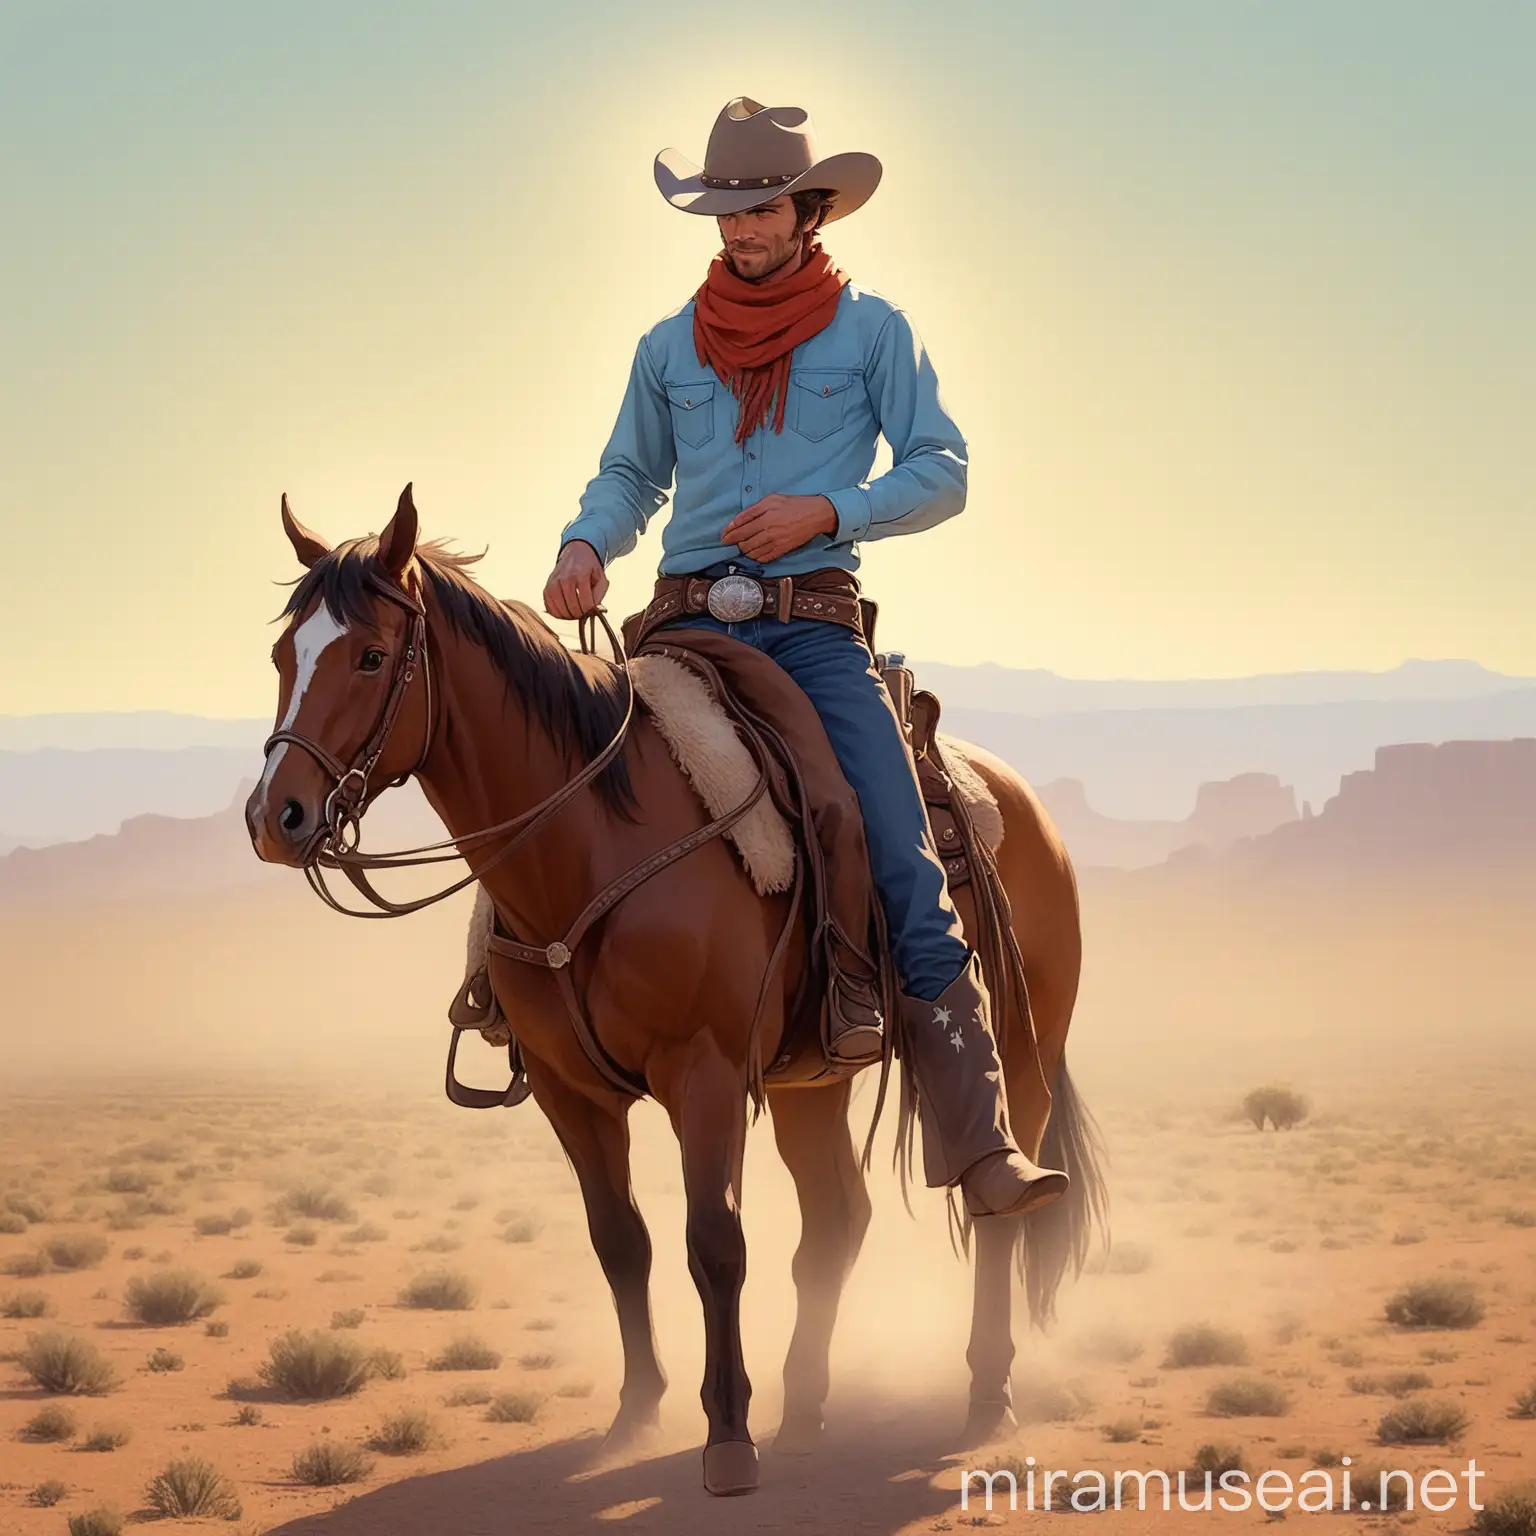 Rugged Cowboy Riding Through Dusty Prairie Landscape